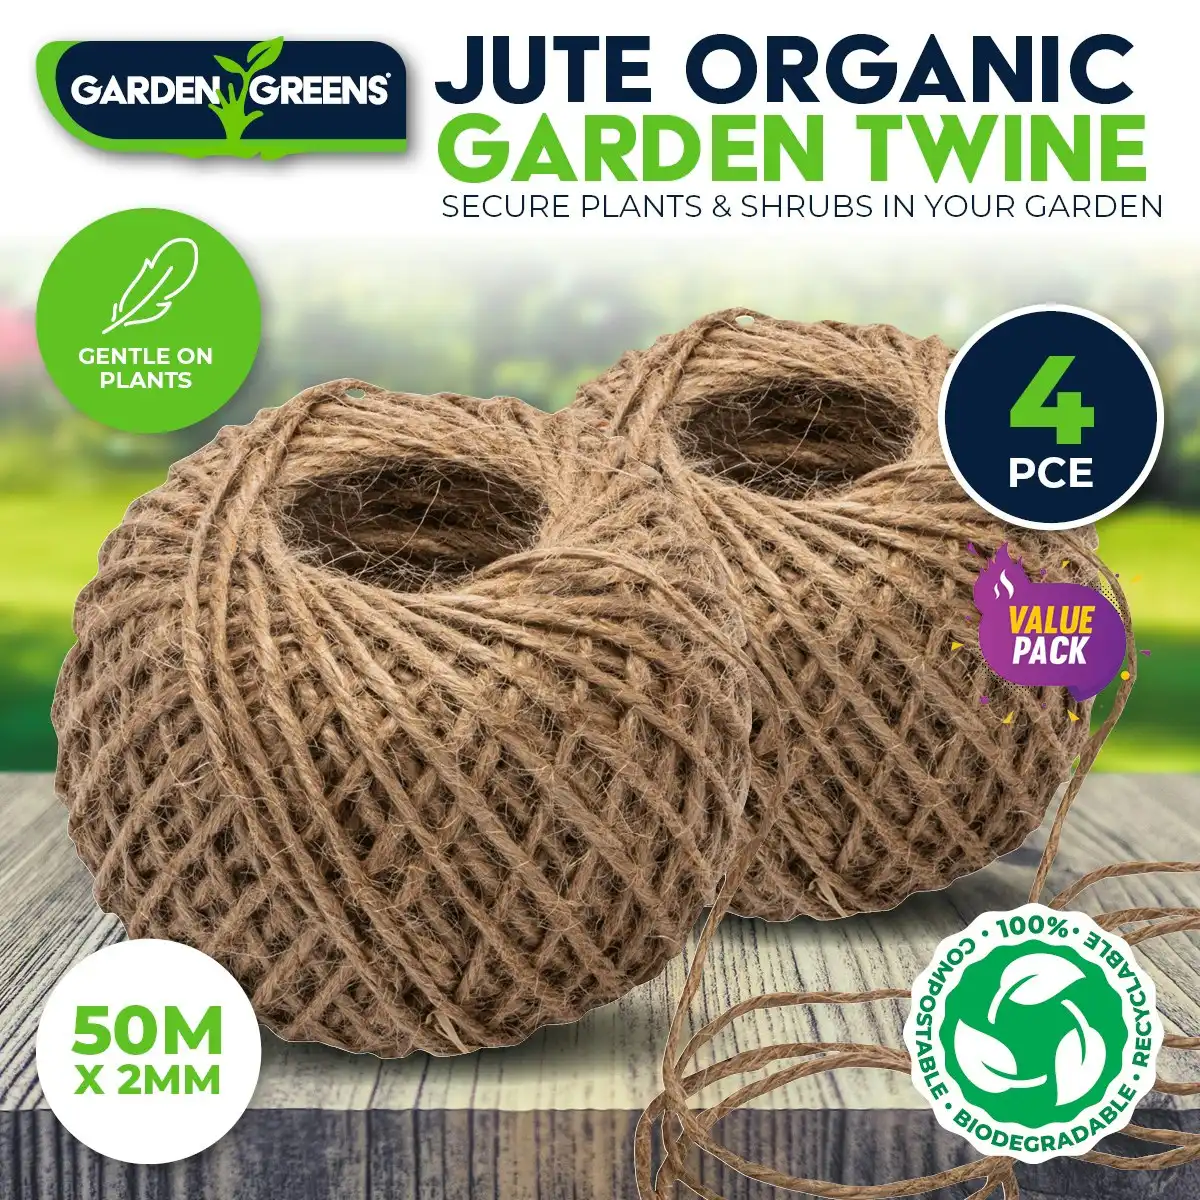 Garden Greens 4PCE Garden Twine Jute Versatile Organic Gentle 50m x 2mm